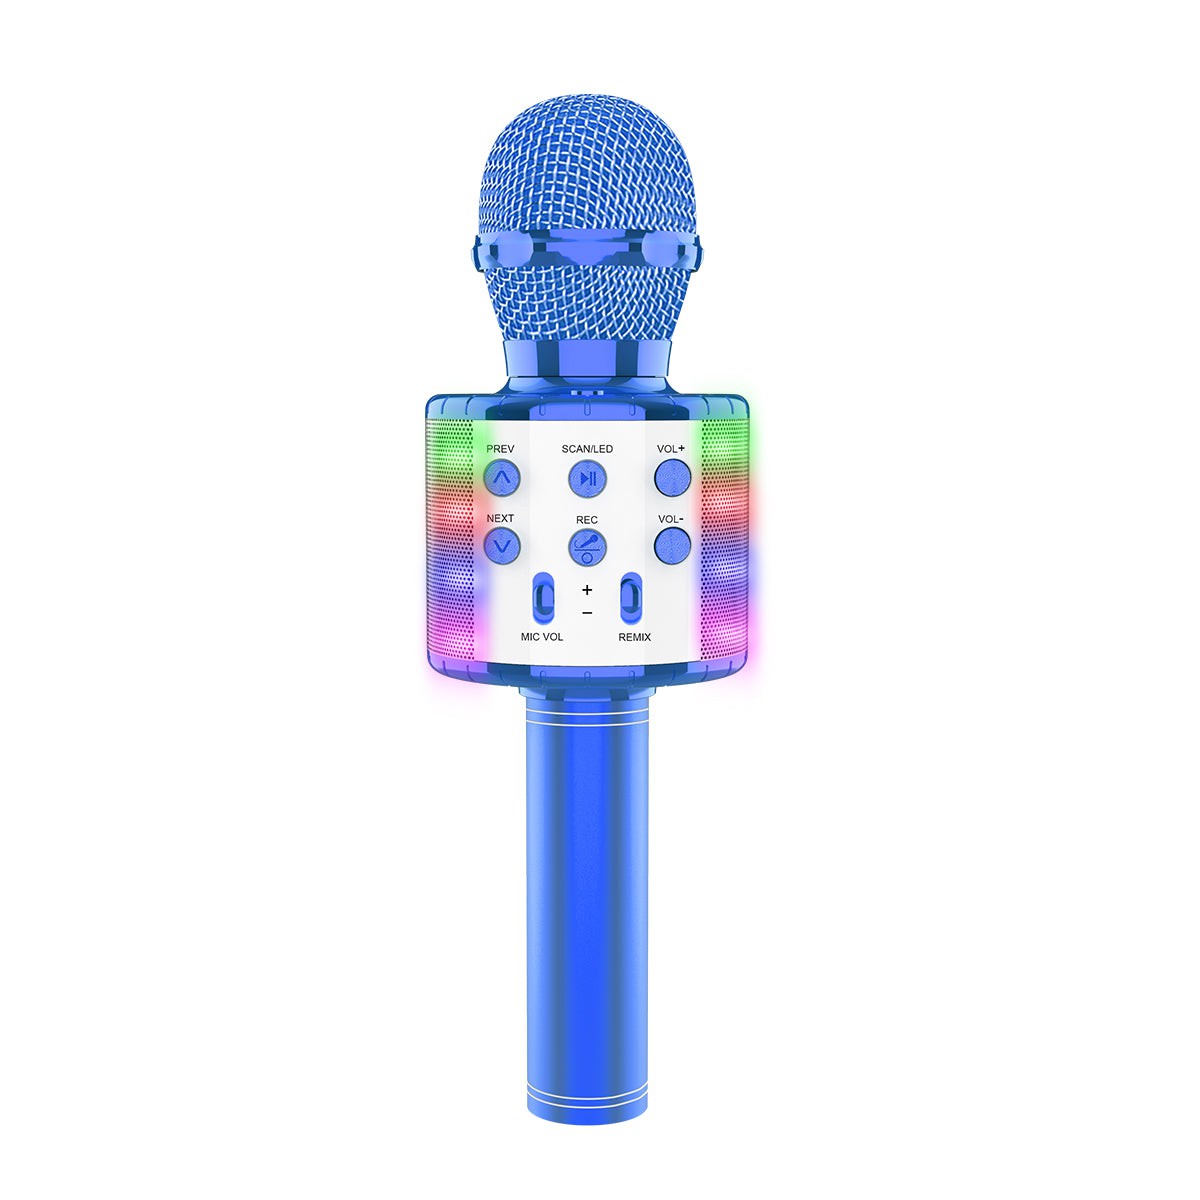 SHENZHEN OCF ELECTRONIC TECHNOLOGY CO., LTD Novelties Blue Wireless Karaoke Microphone with LED Lights, 1 Count